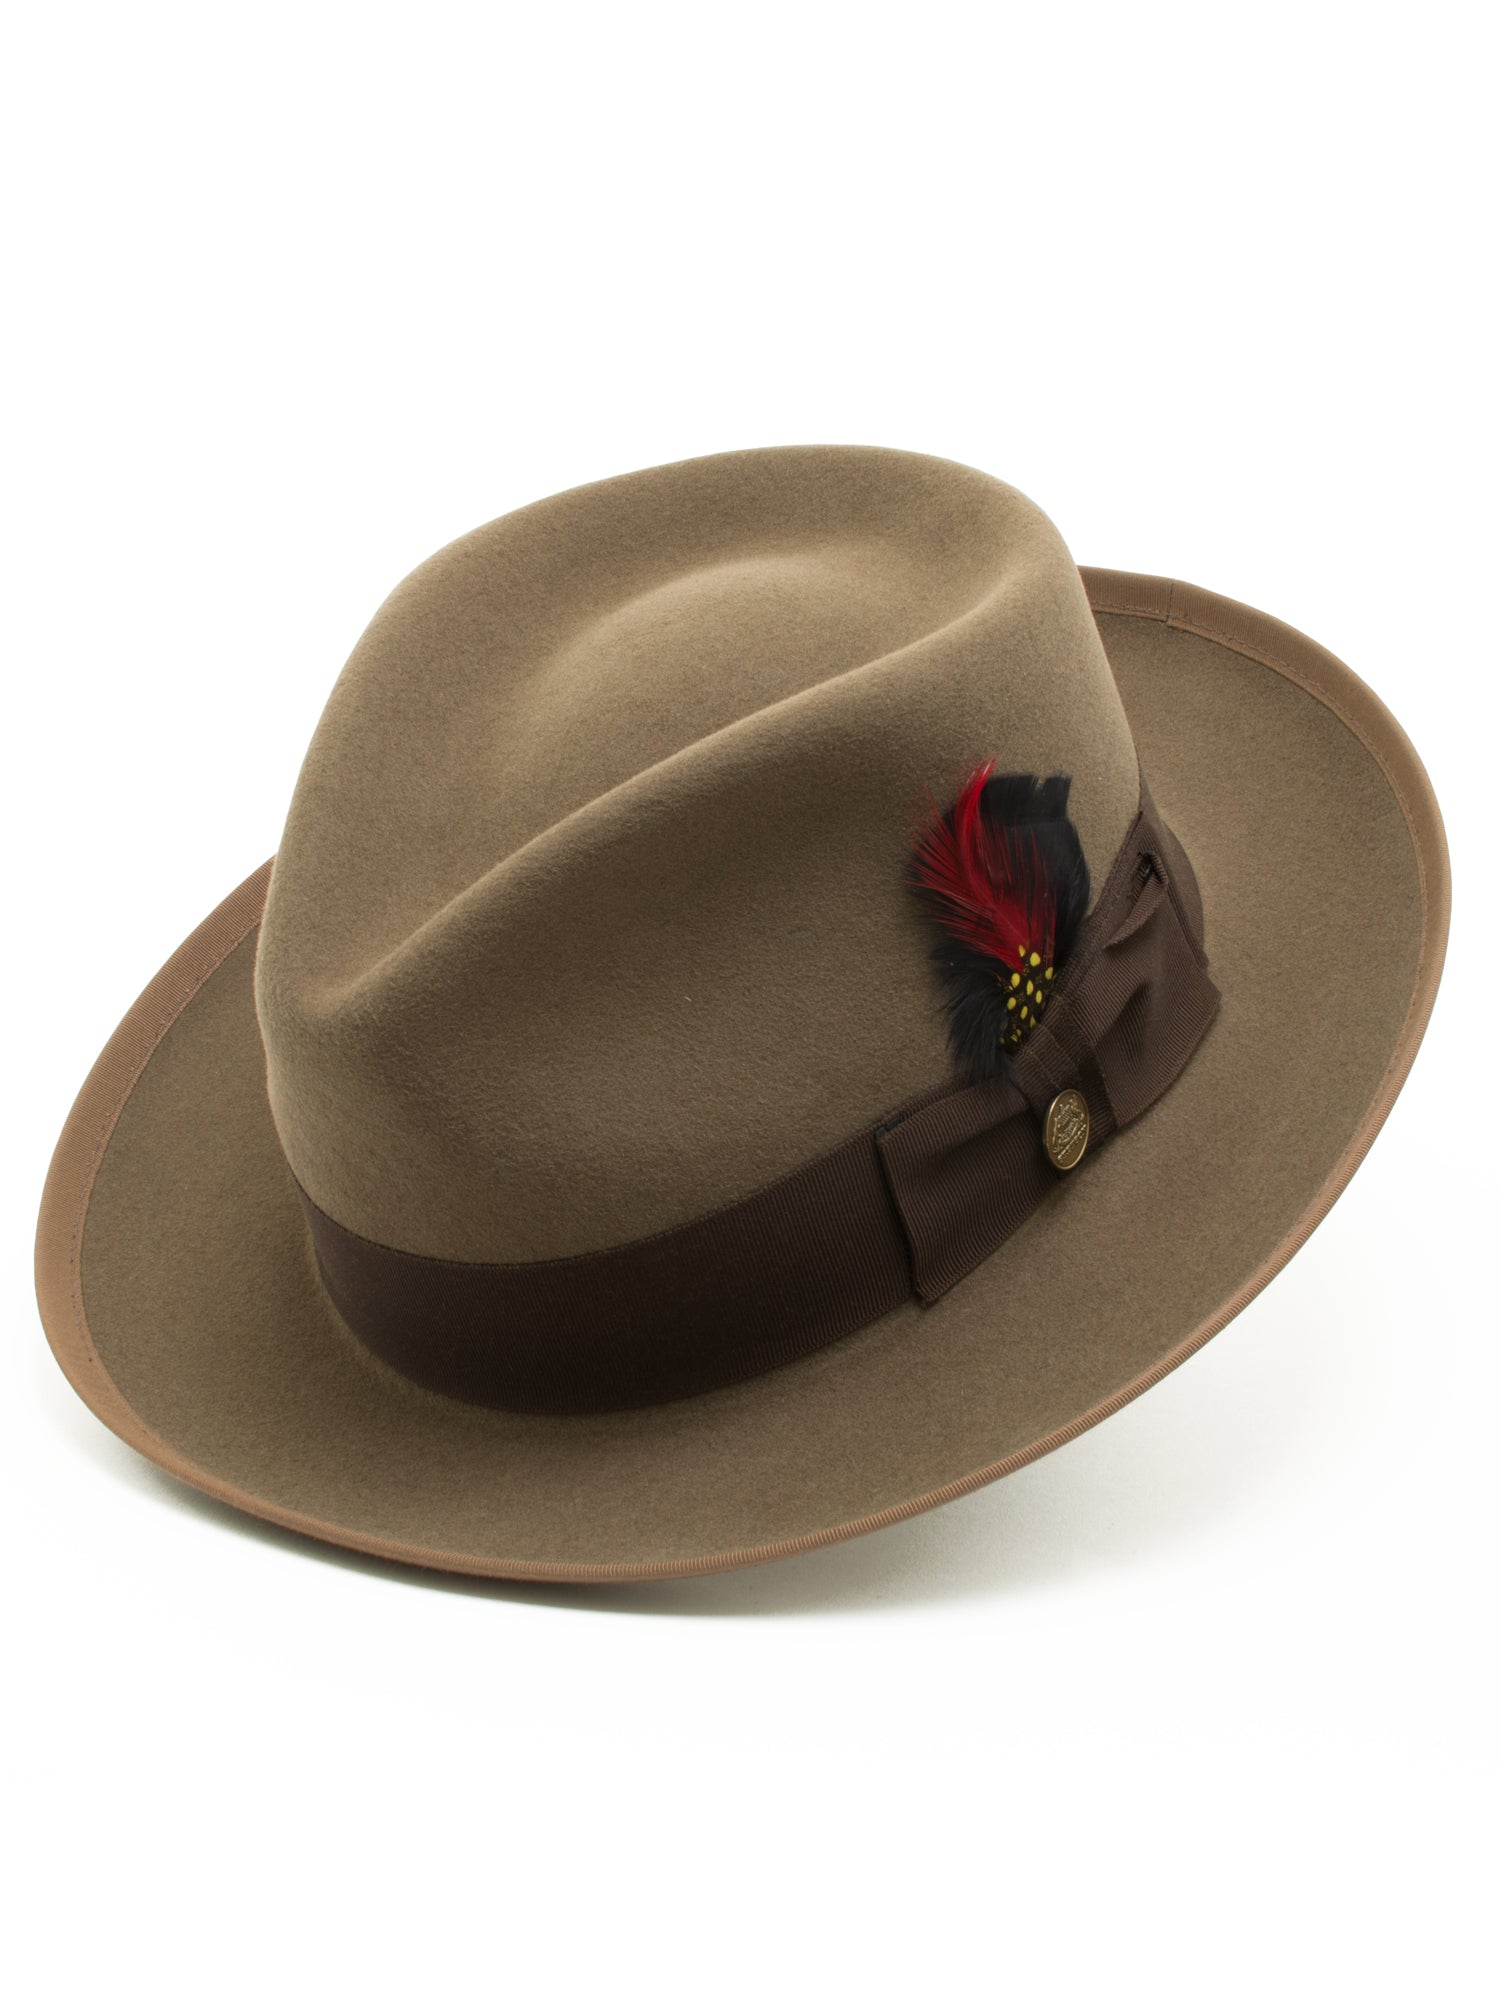 Stetson 100% Wool Felt 'Whippet' Hats in CAMEL